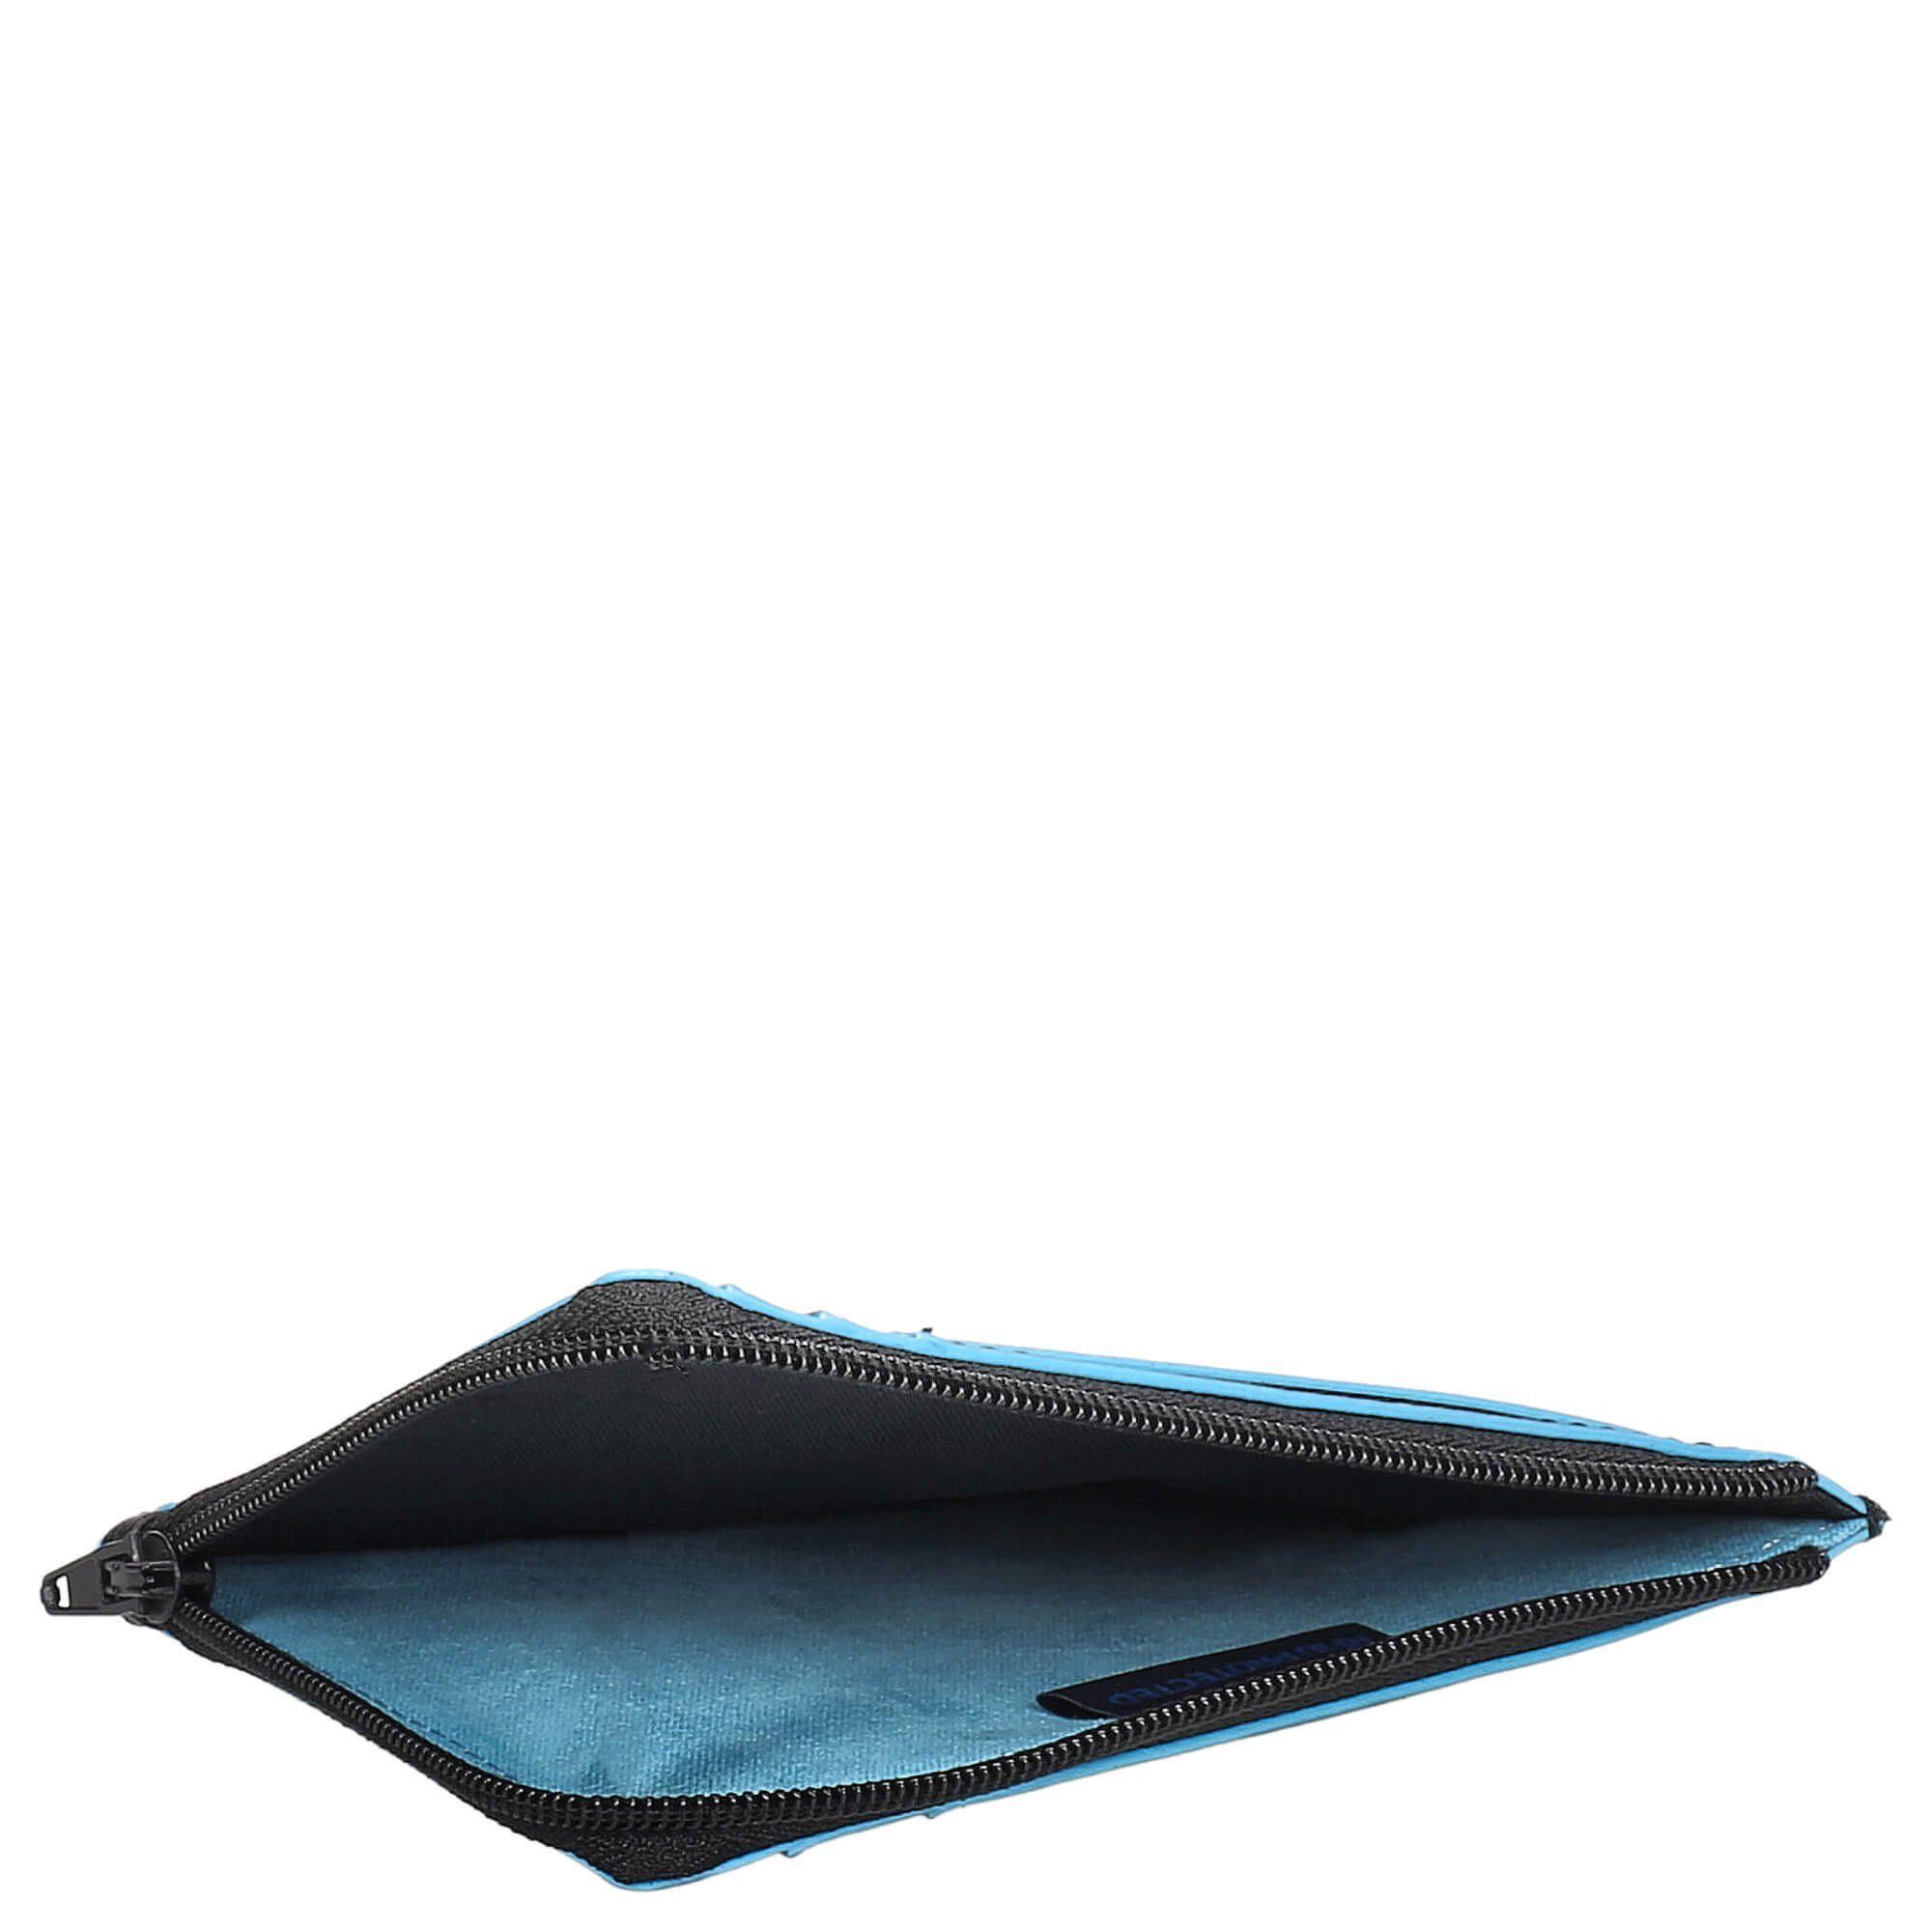 Square cm RFID black (1-tlg) Geldbörse Kreditkartenetui Piquadro Blue - 12.5 8cc